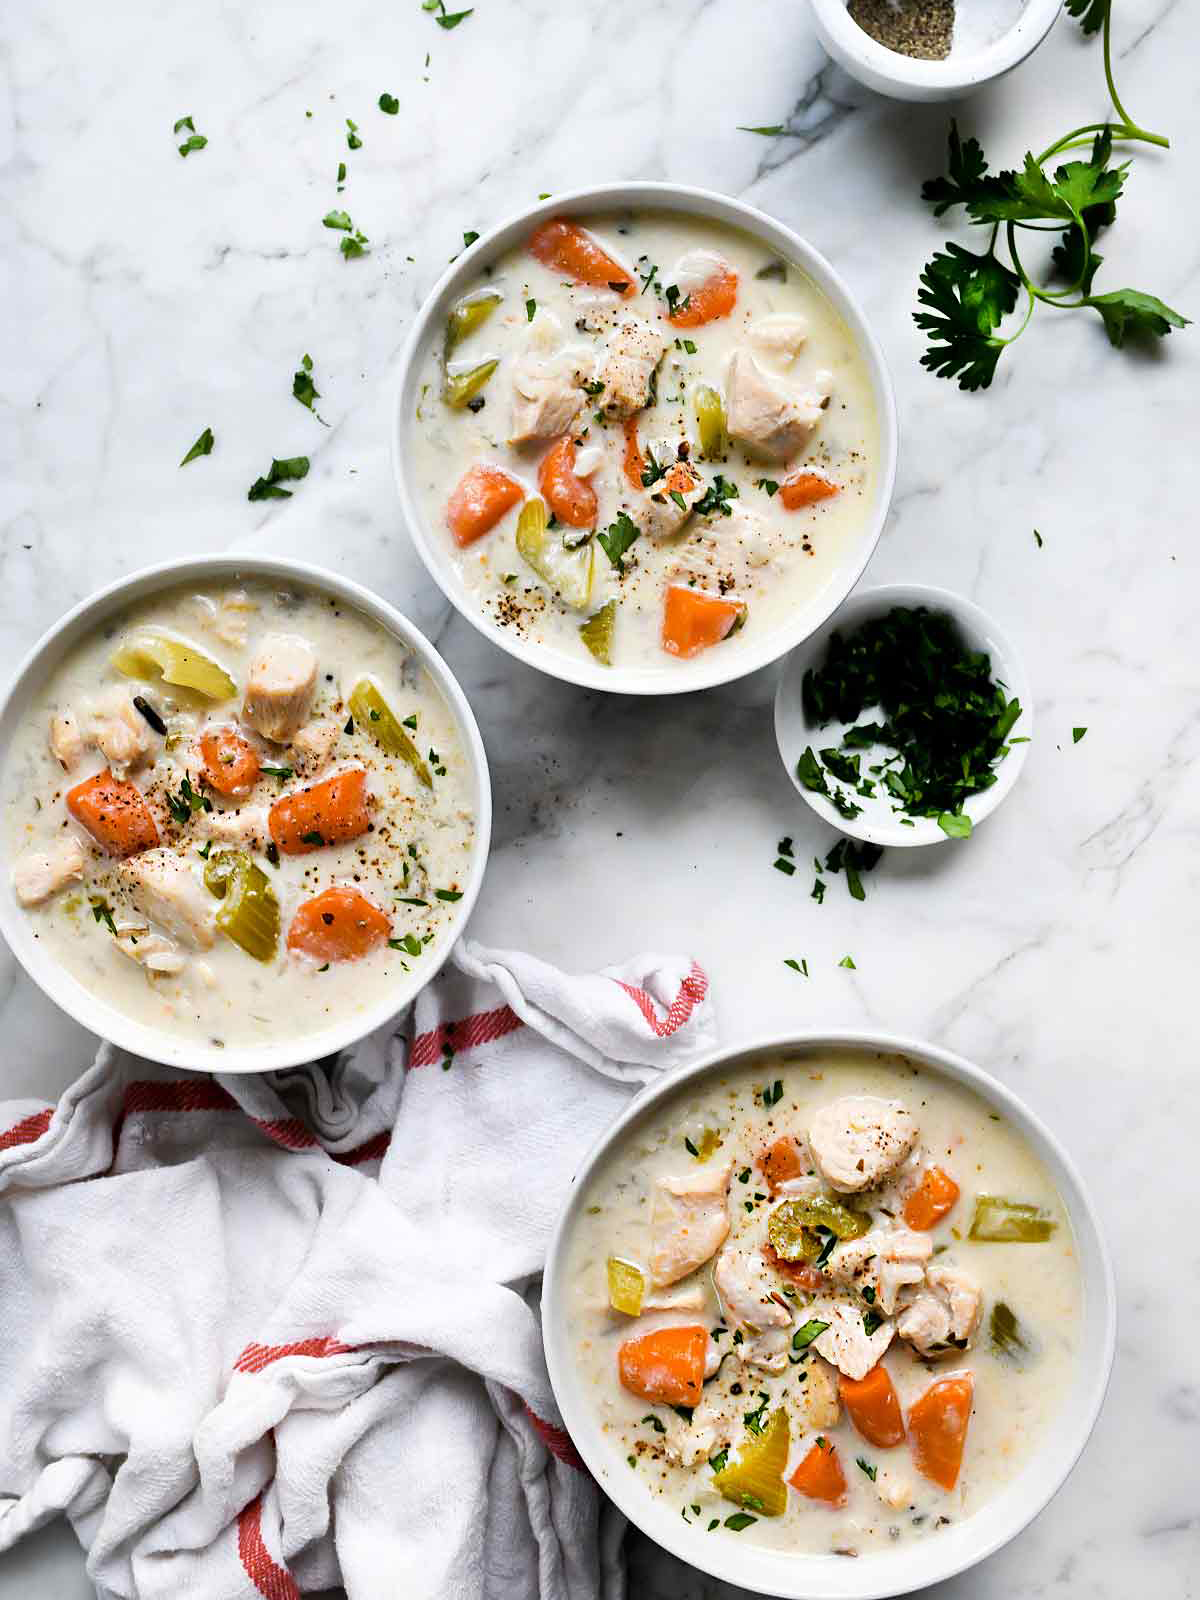 https://www.domino.com/uploads/2019/11/27/00-FEATURE-instant-pot-soups-Creamy-Chicken-Rice.jpg?auto=webp